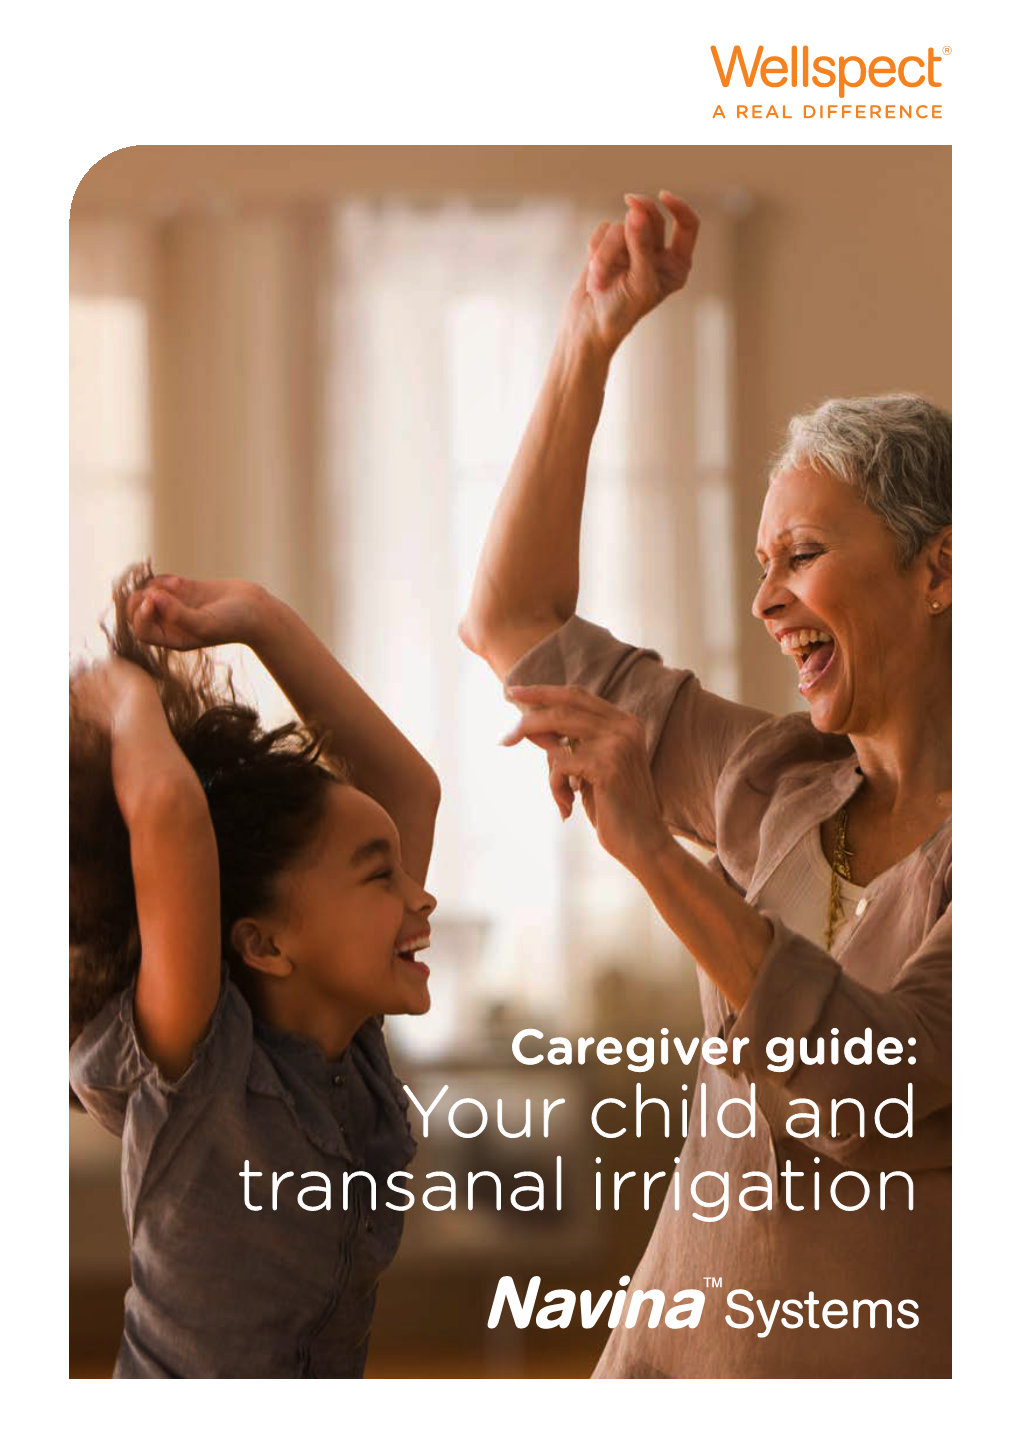 Caregiver Guide: Your Child and Transanal Irrigation DEAR PARENT OR CAREGIVER